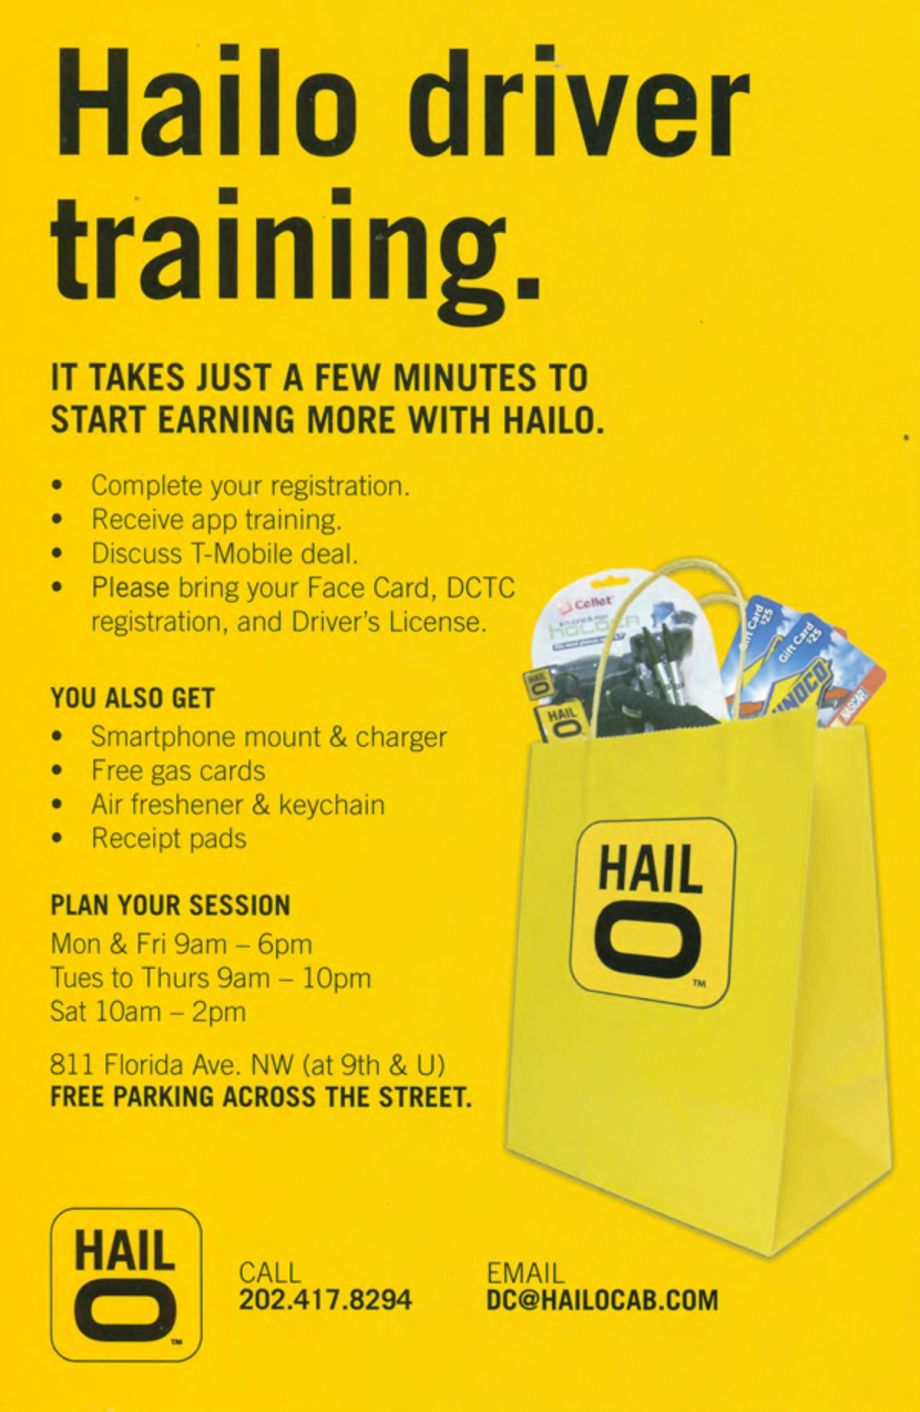 Hailo driver training